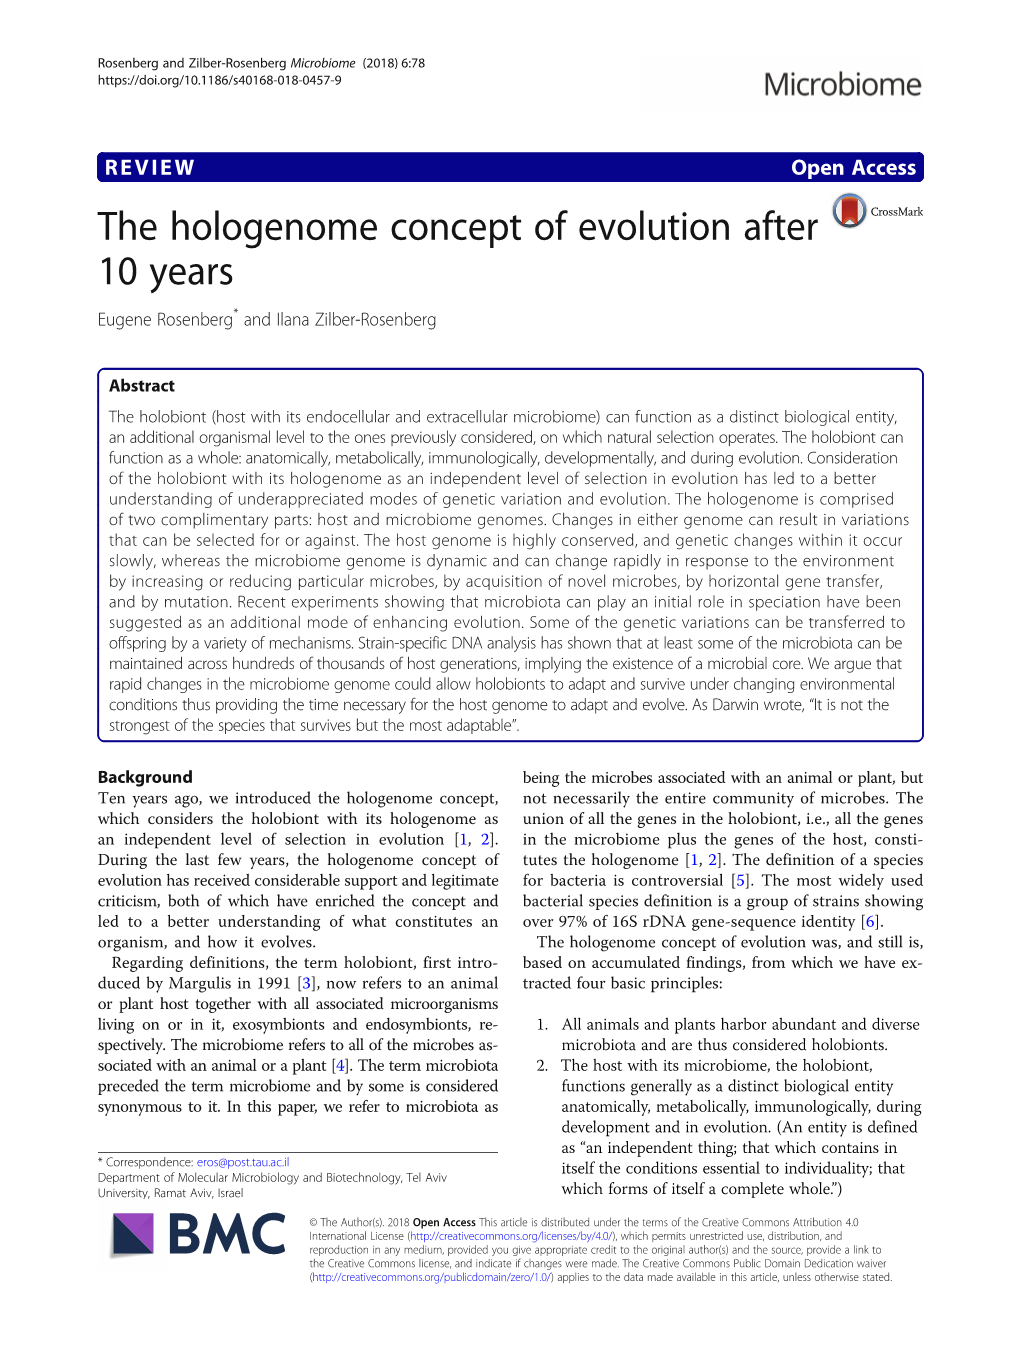 The Hologenome Concept of Evolution After 10 Years Eugene Rosenberg* and Ilana Zilber-Rosenberg